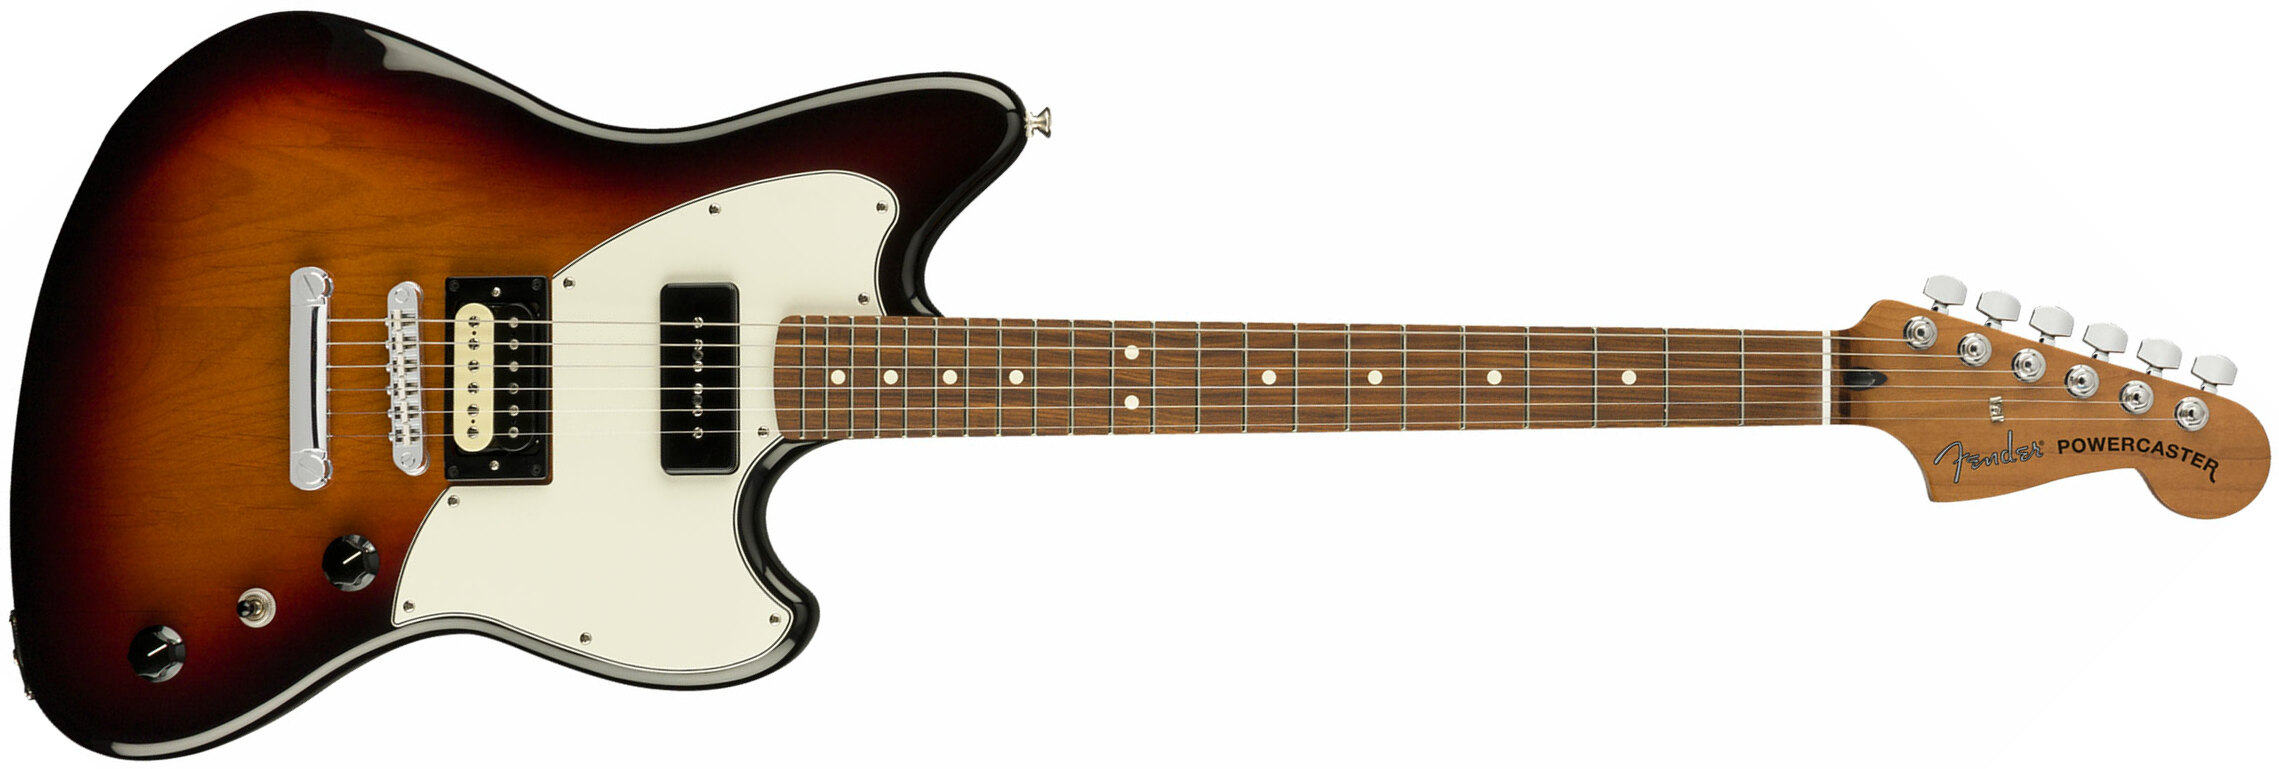 Fender Powercaster Alternate Reality Ltd Hp90 Ht Pf - 3-color Sunburst - Guitarra electrica retro rock - Main picture